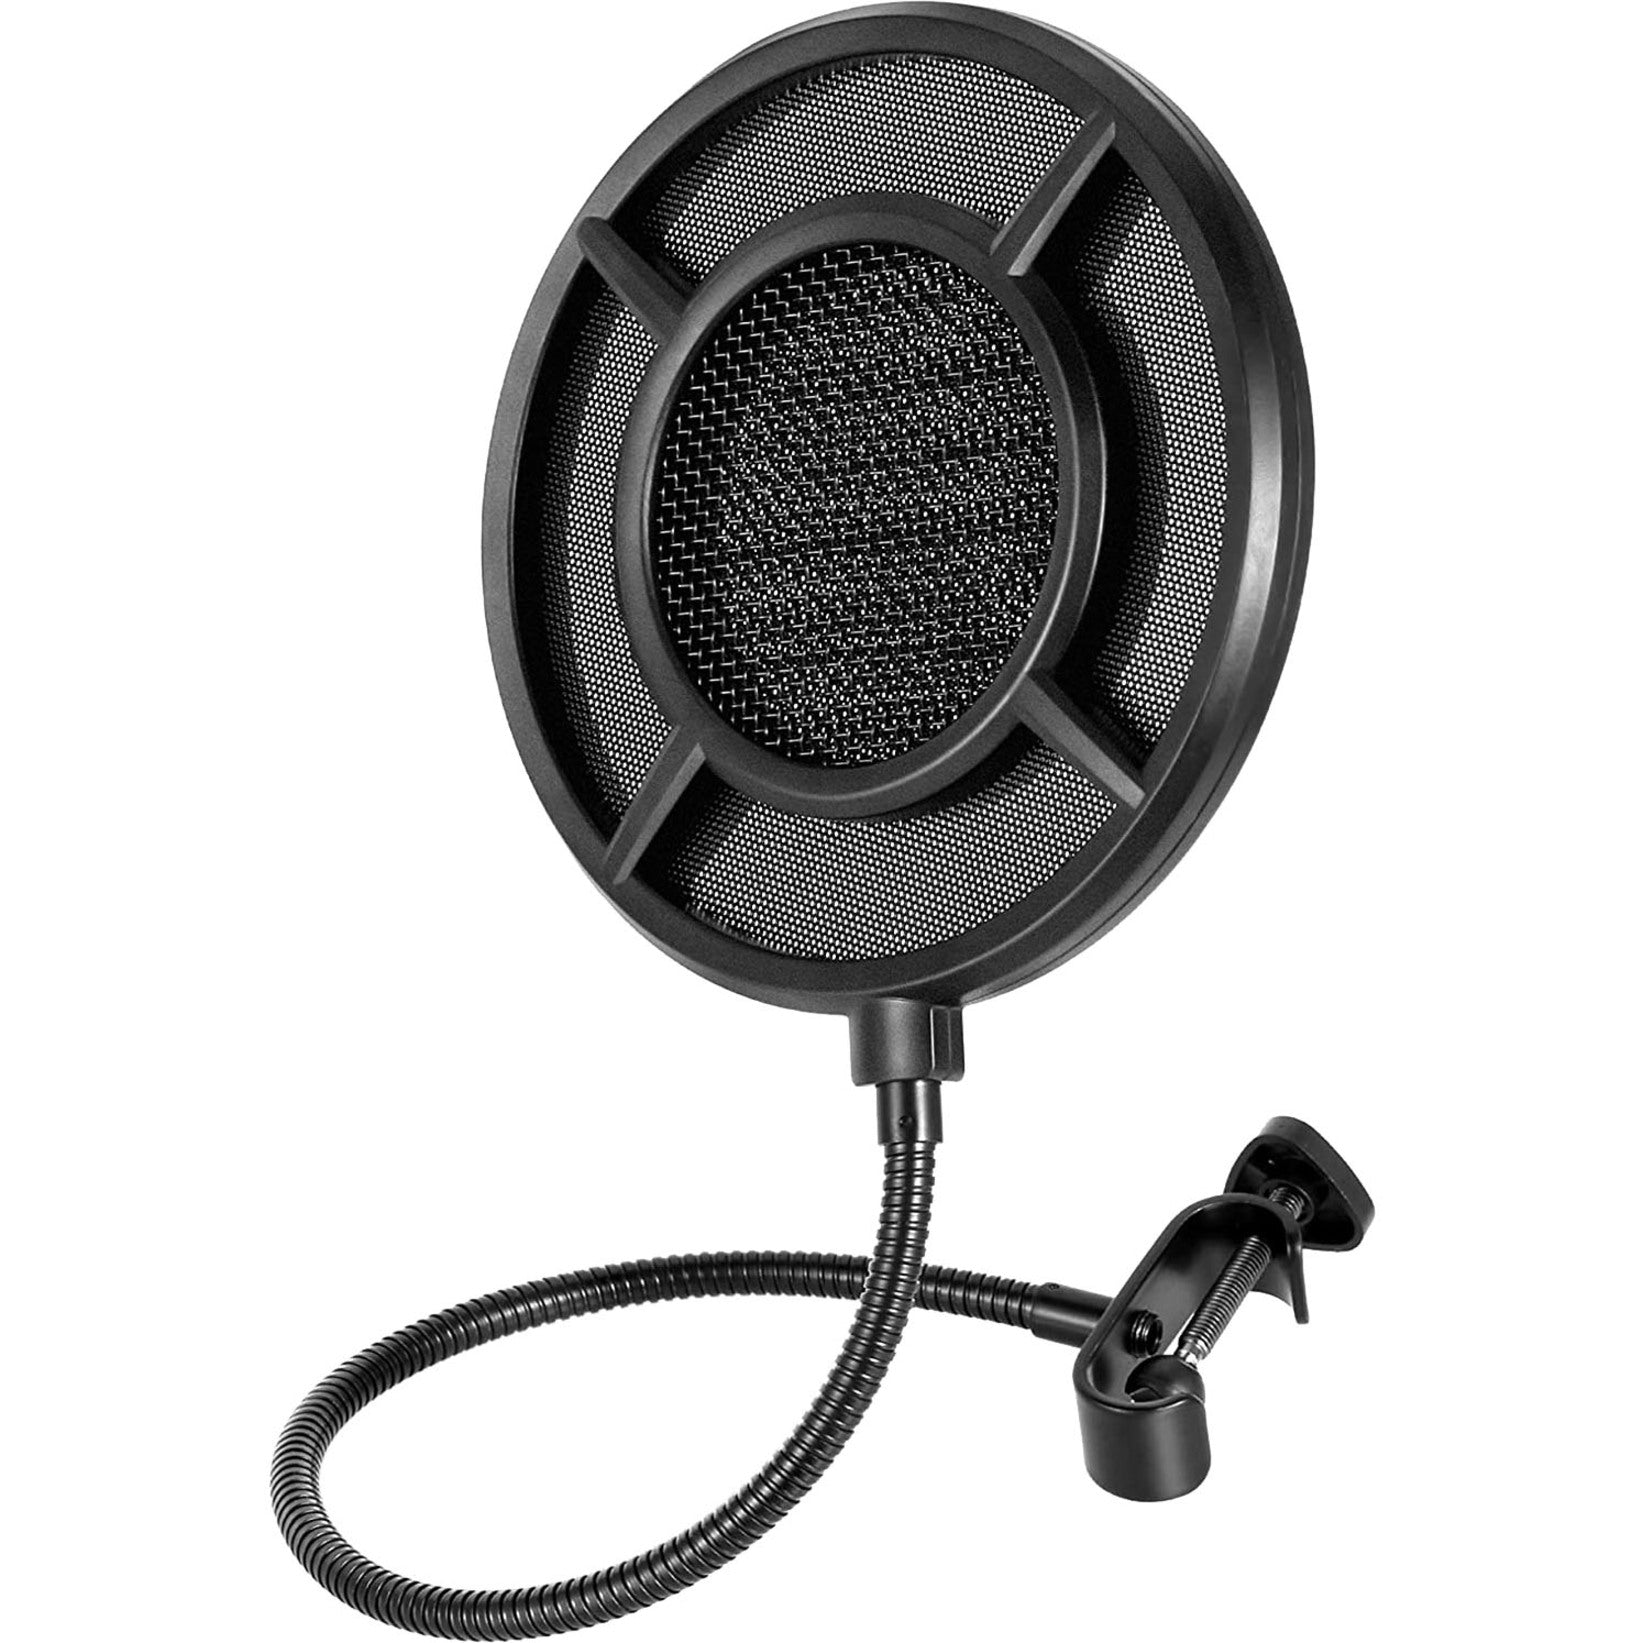 Thronmax P1 Proof-Pop Filter, Steel Nylon Mesh Carbon Metal, Microphone Pop Filter